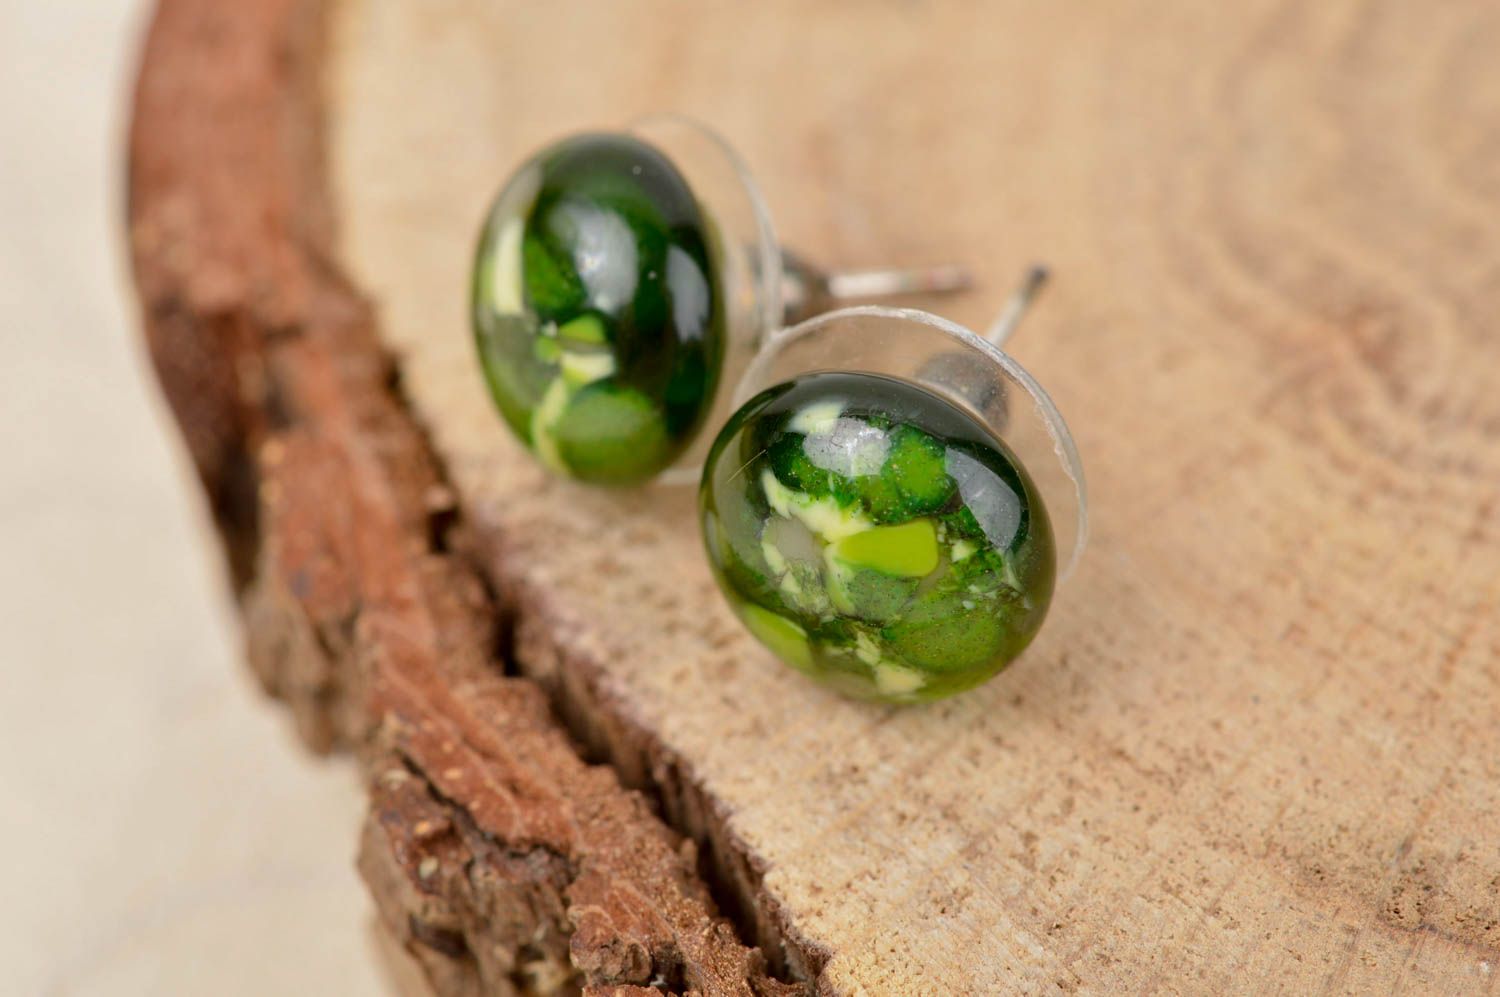 Handmade glass earrings stud earrings design artisan jewelry gifts for her photo 1